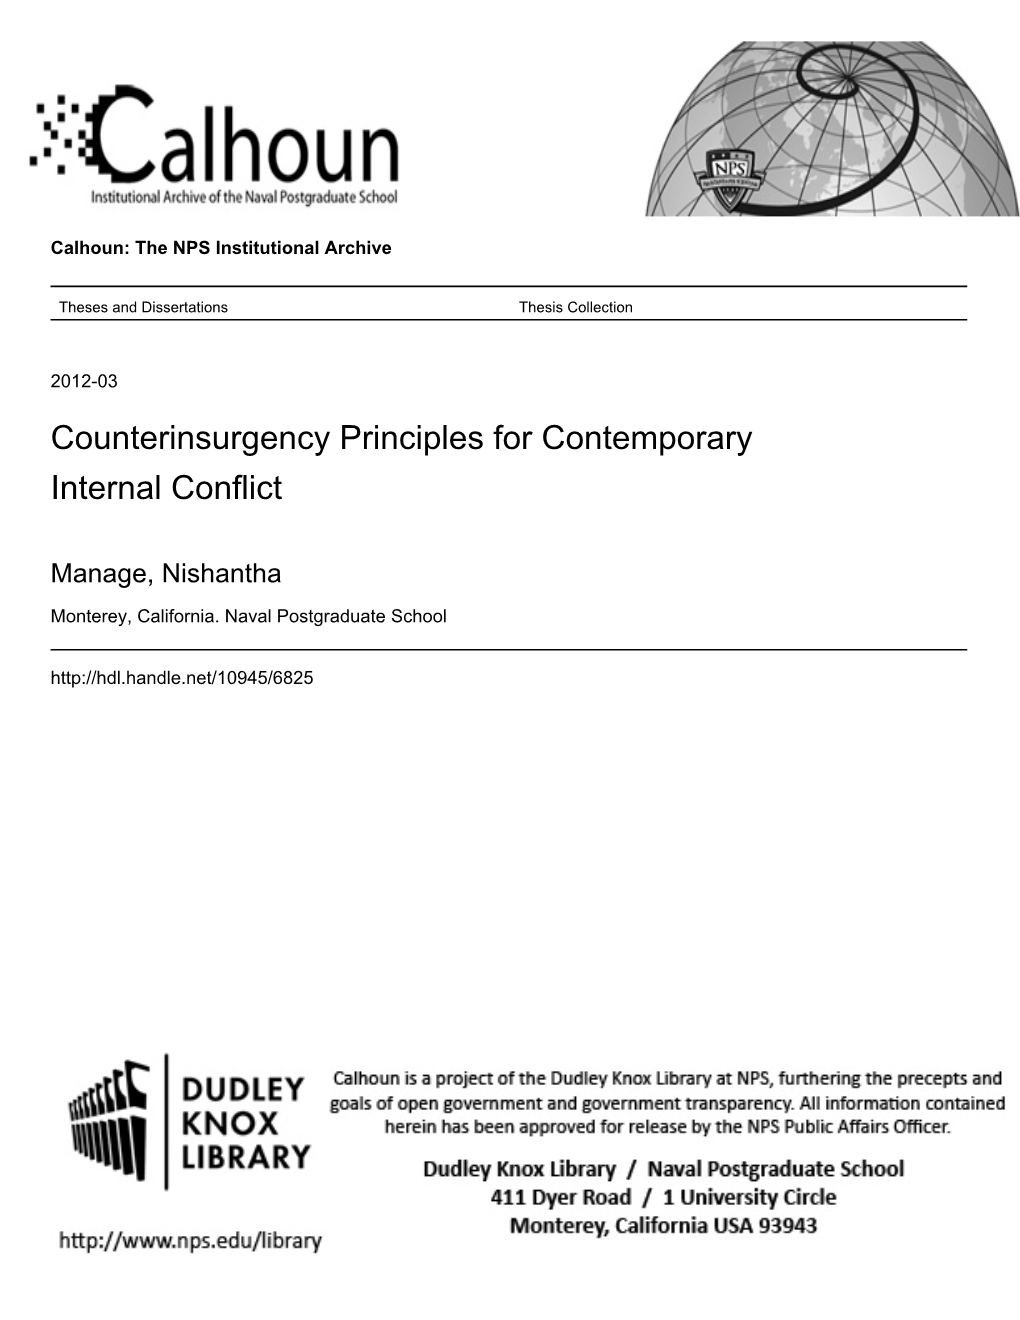 Counterinsurgency Principles for Contemporary Internal Conflict